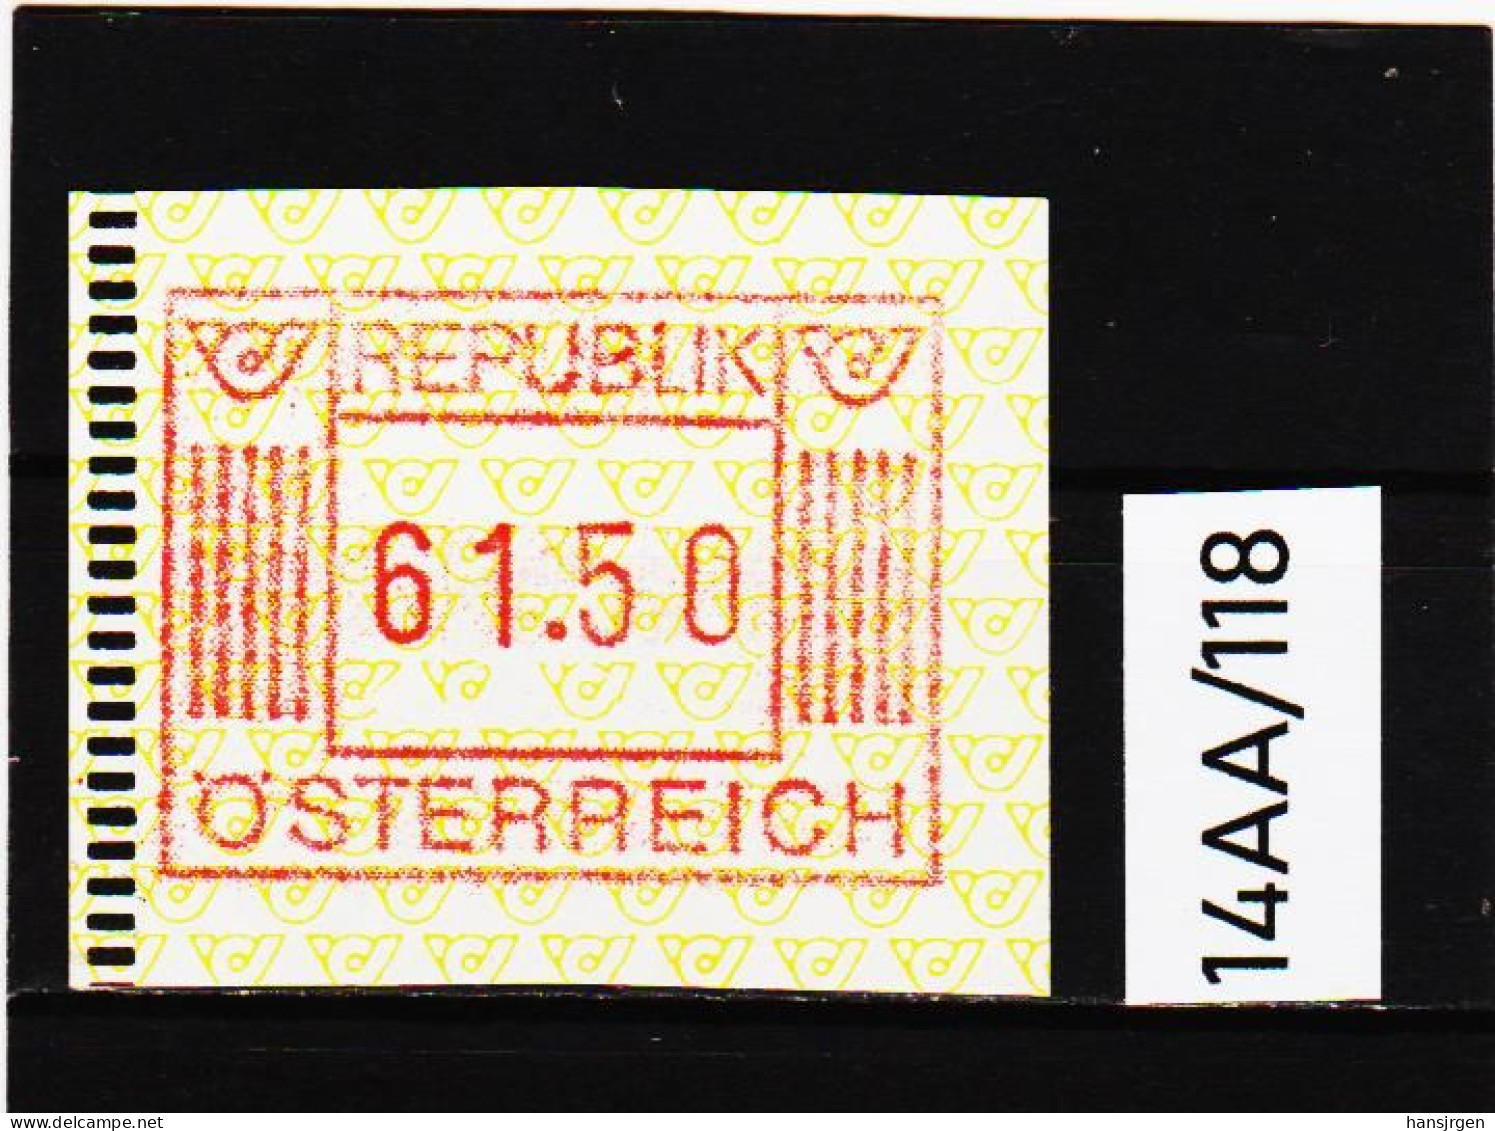 14AA/118  ÖSTERREICH 1983 AUTOMATENMARKEN  A N K  1. AUSGABE  61,50 SCHILLING   ** Postfrisch - Timbres De Distributeurs [ATM]